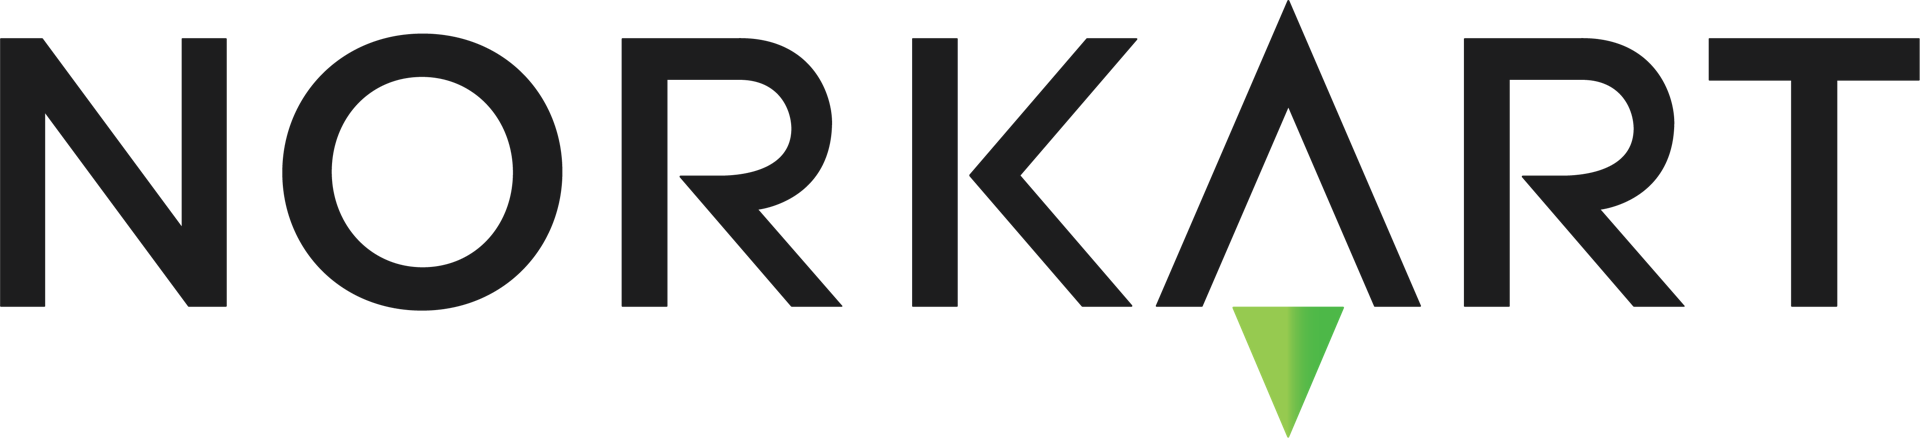 Norkart logo